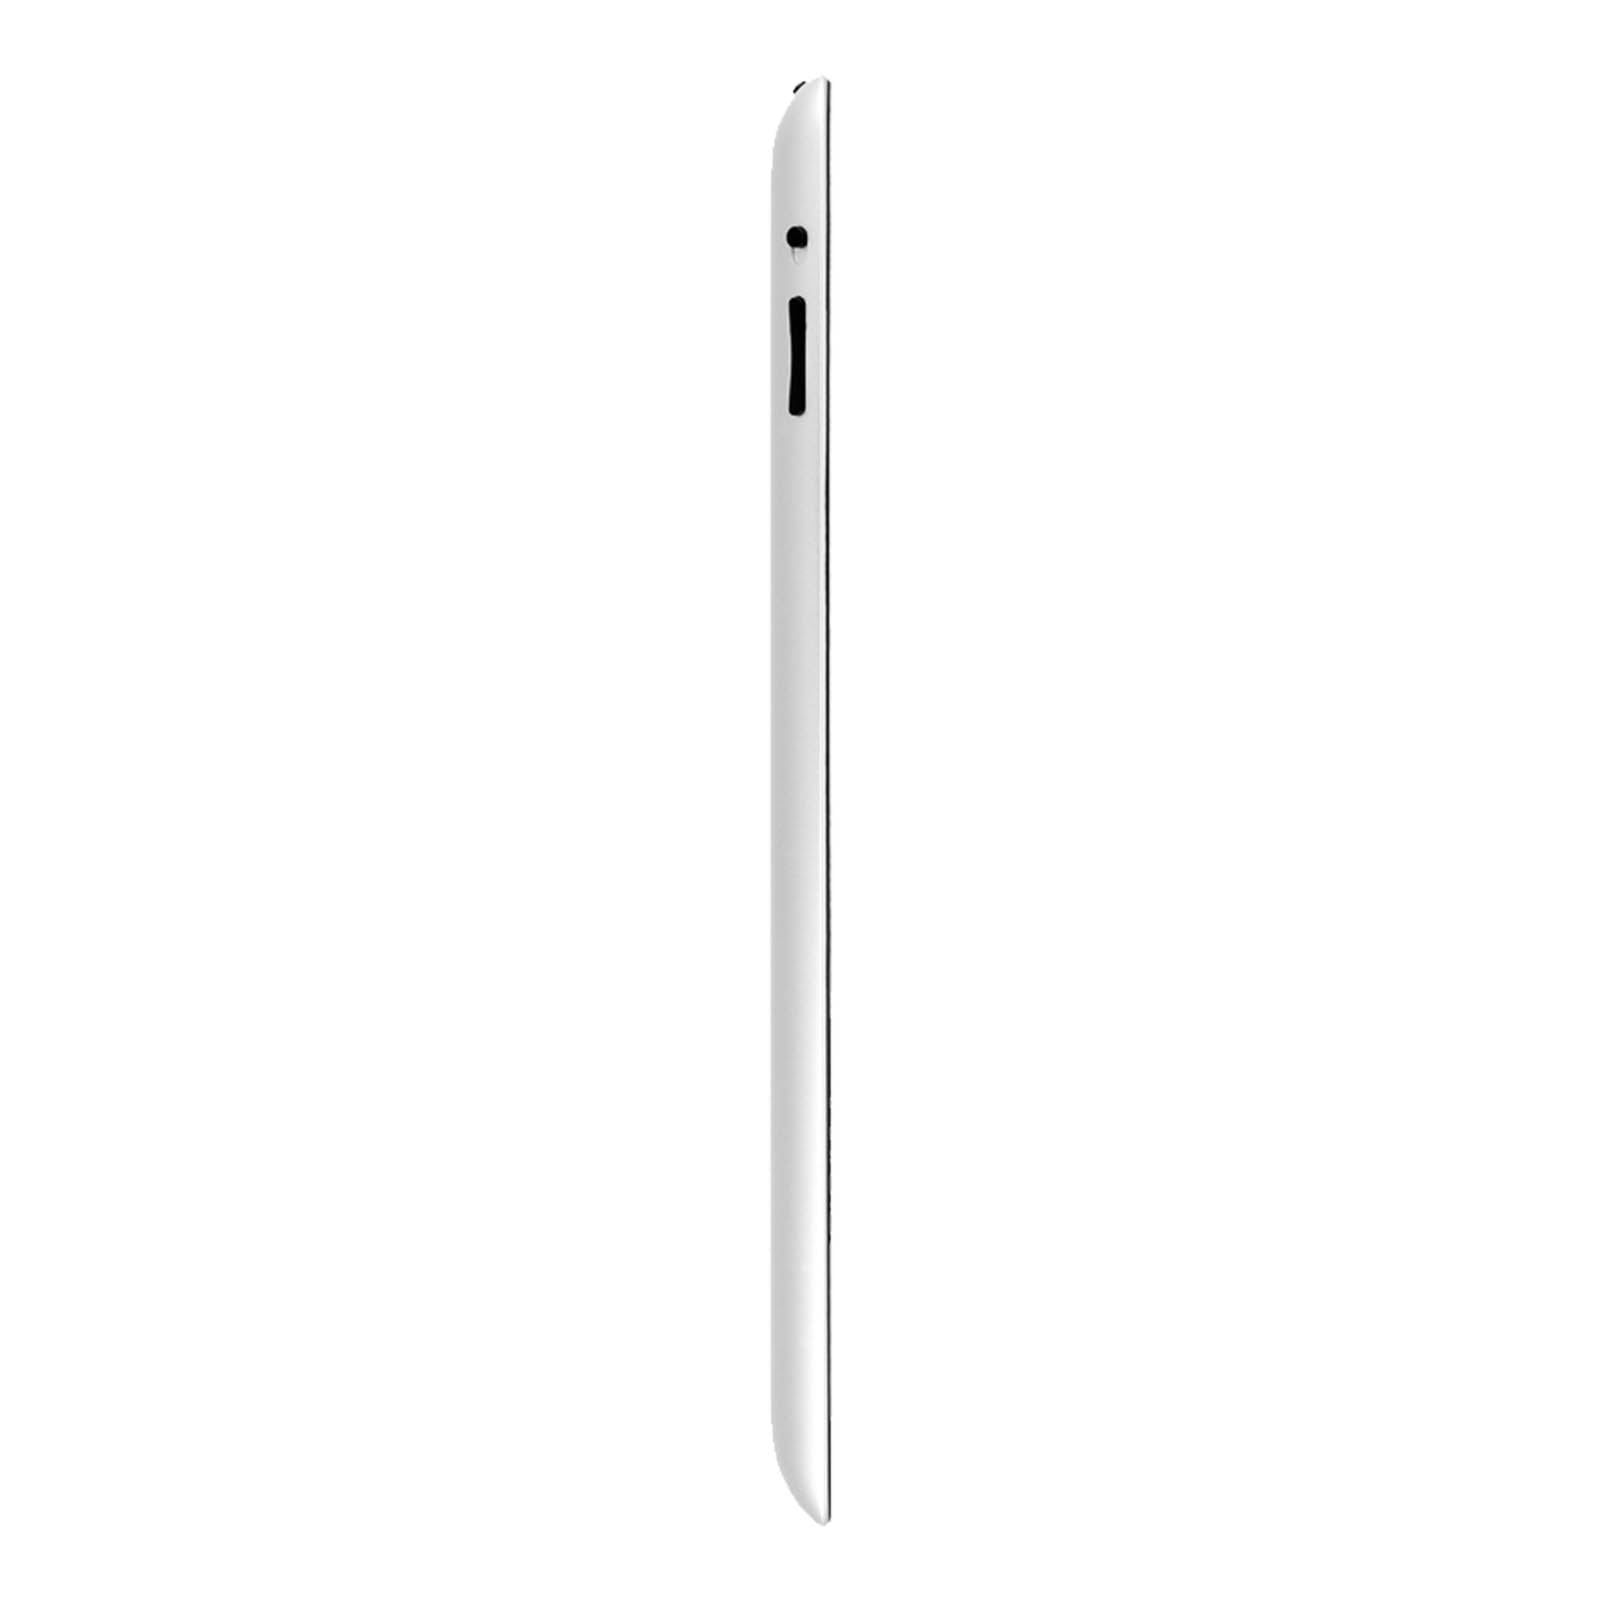 Apple iPad 3 64GB White Pristine - Unlocked